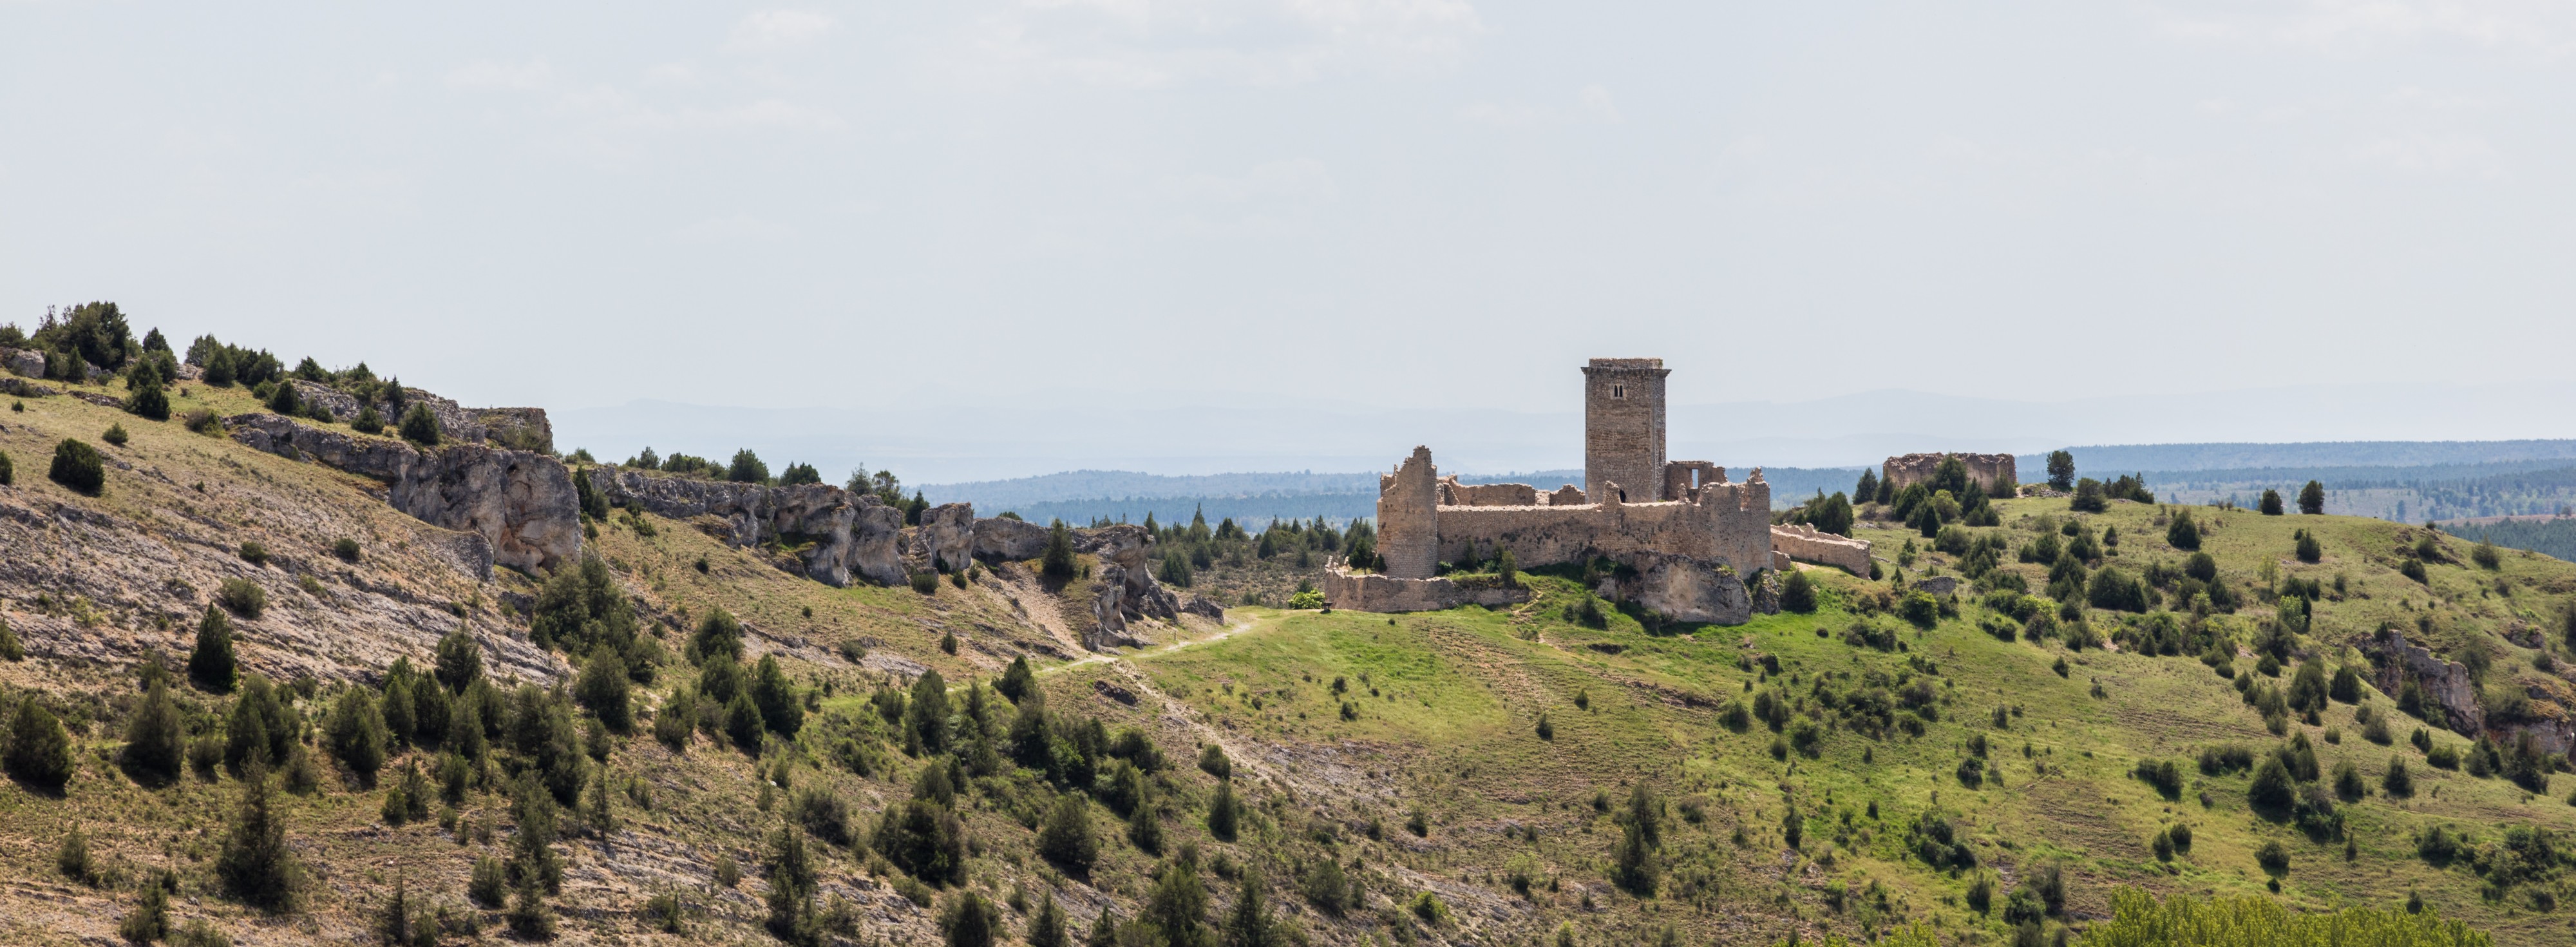 Castillo de Ucero, Ucero, Soria, España, 2017-05-26, DD 69